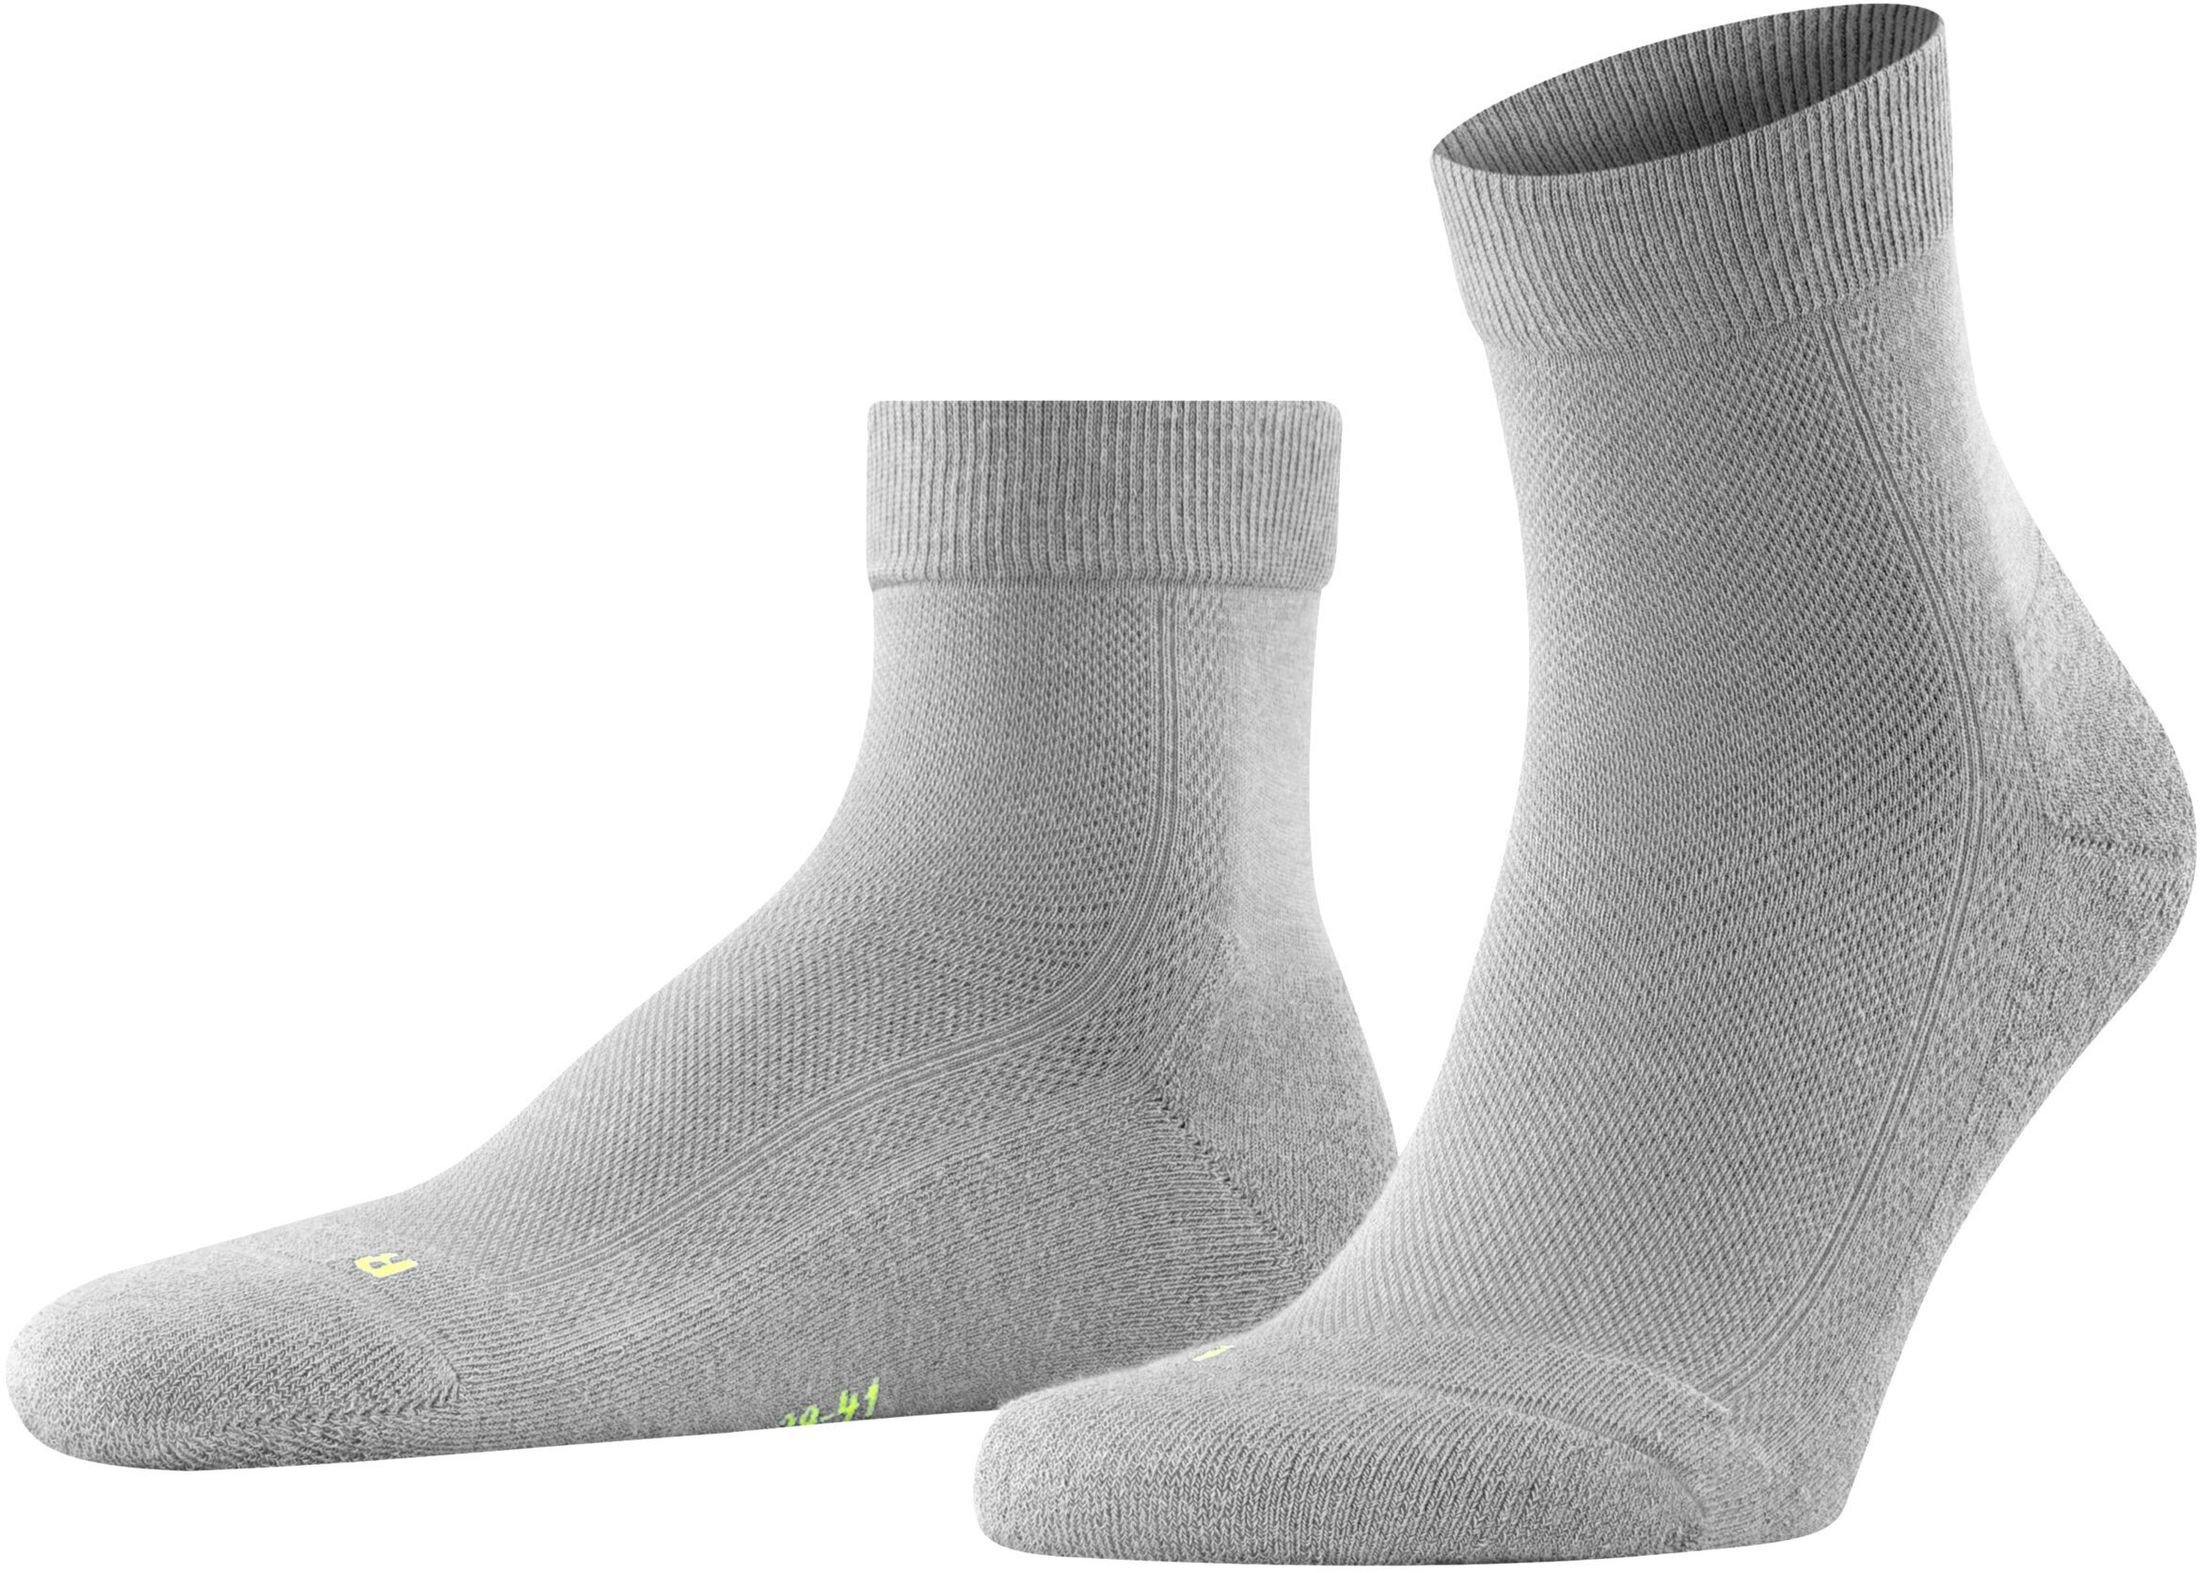 Falke Cool Kick Sock Grey size 46-48 product